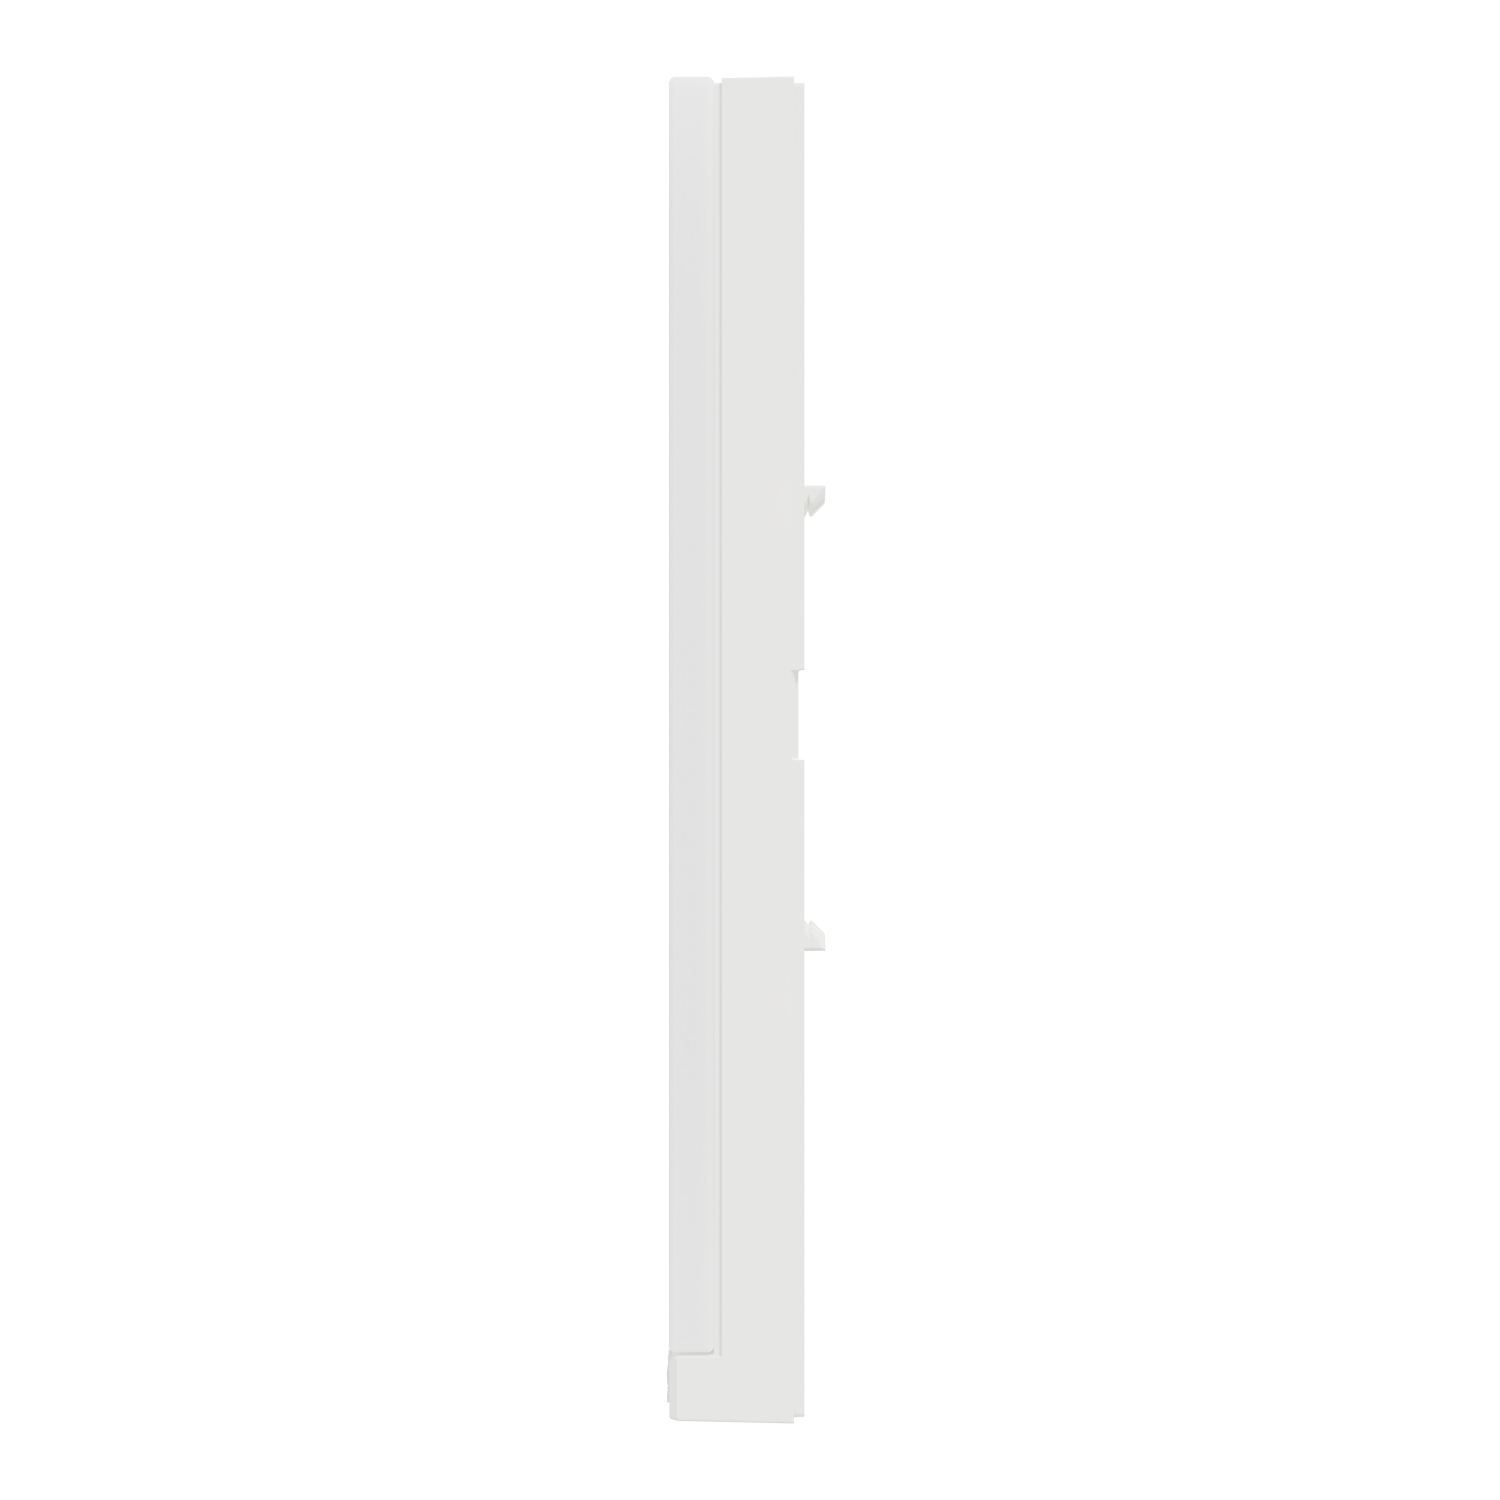 NU610389 - Cover frame, New Unica, 3 modules, translucide white 